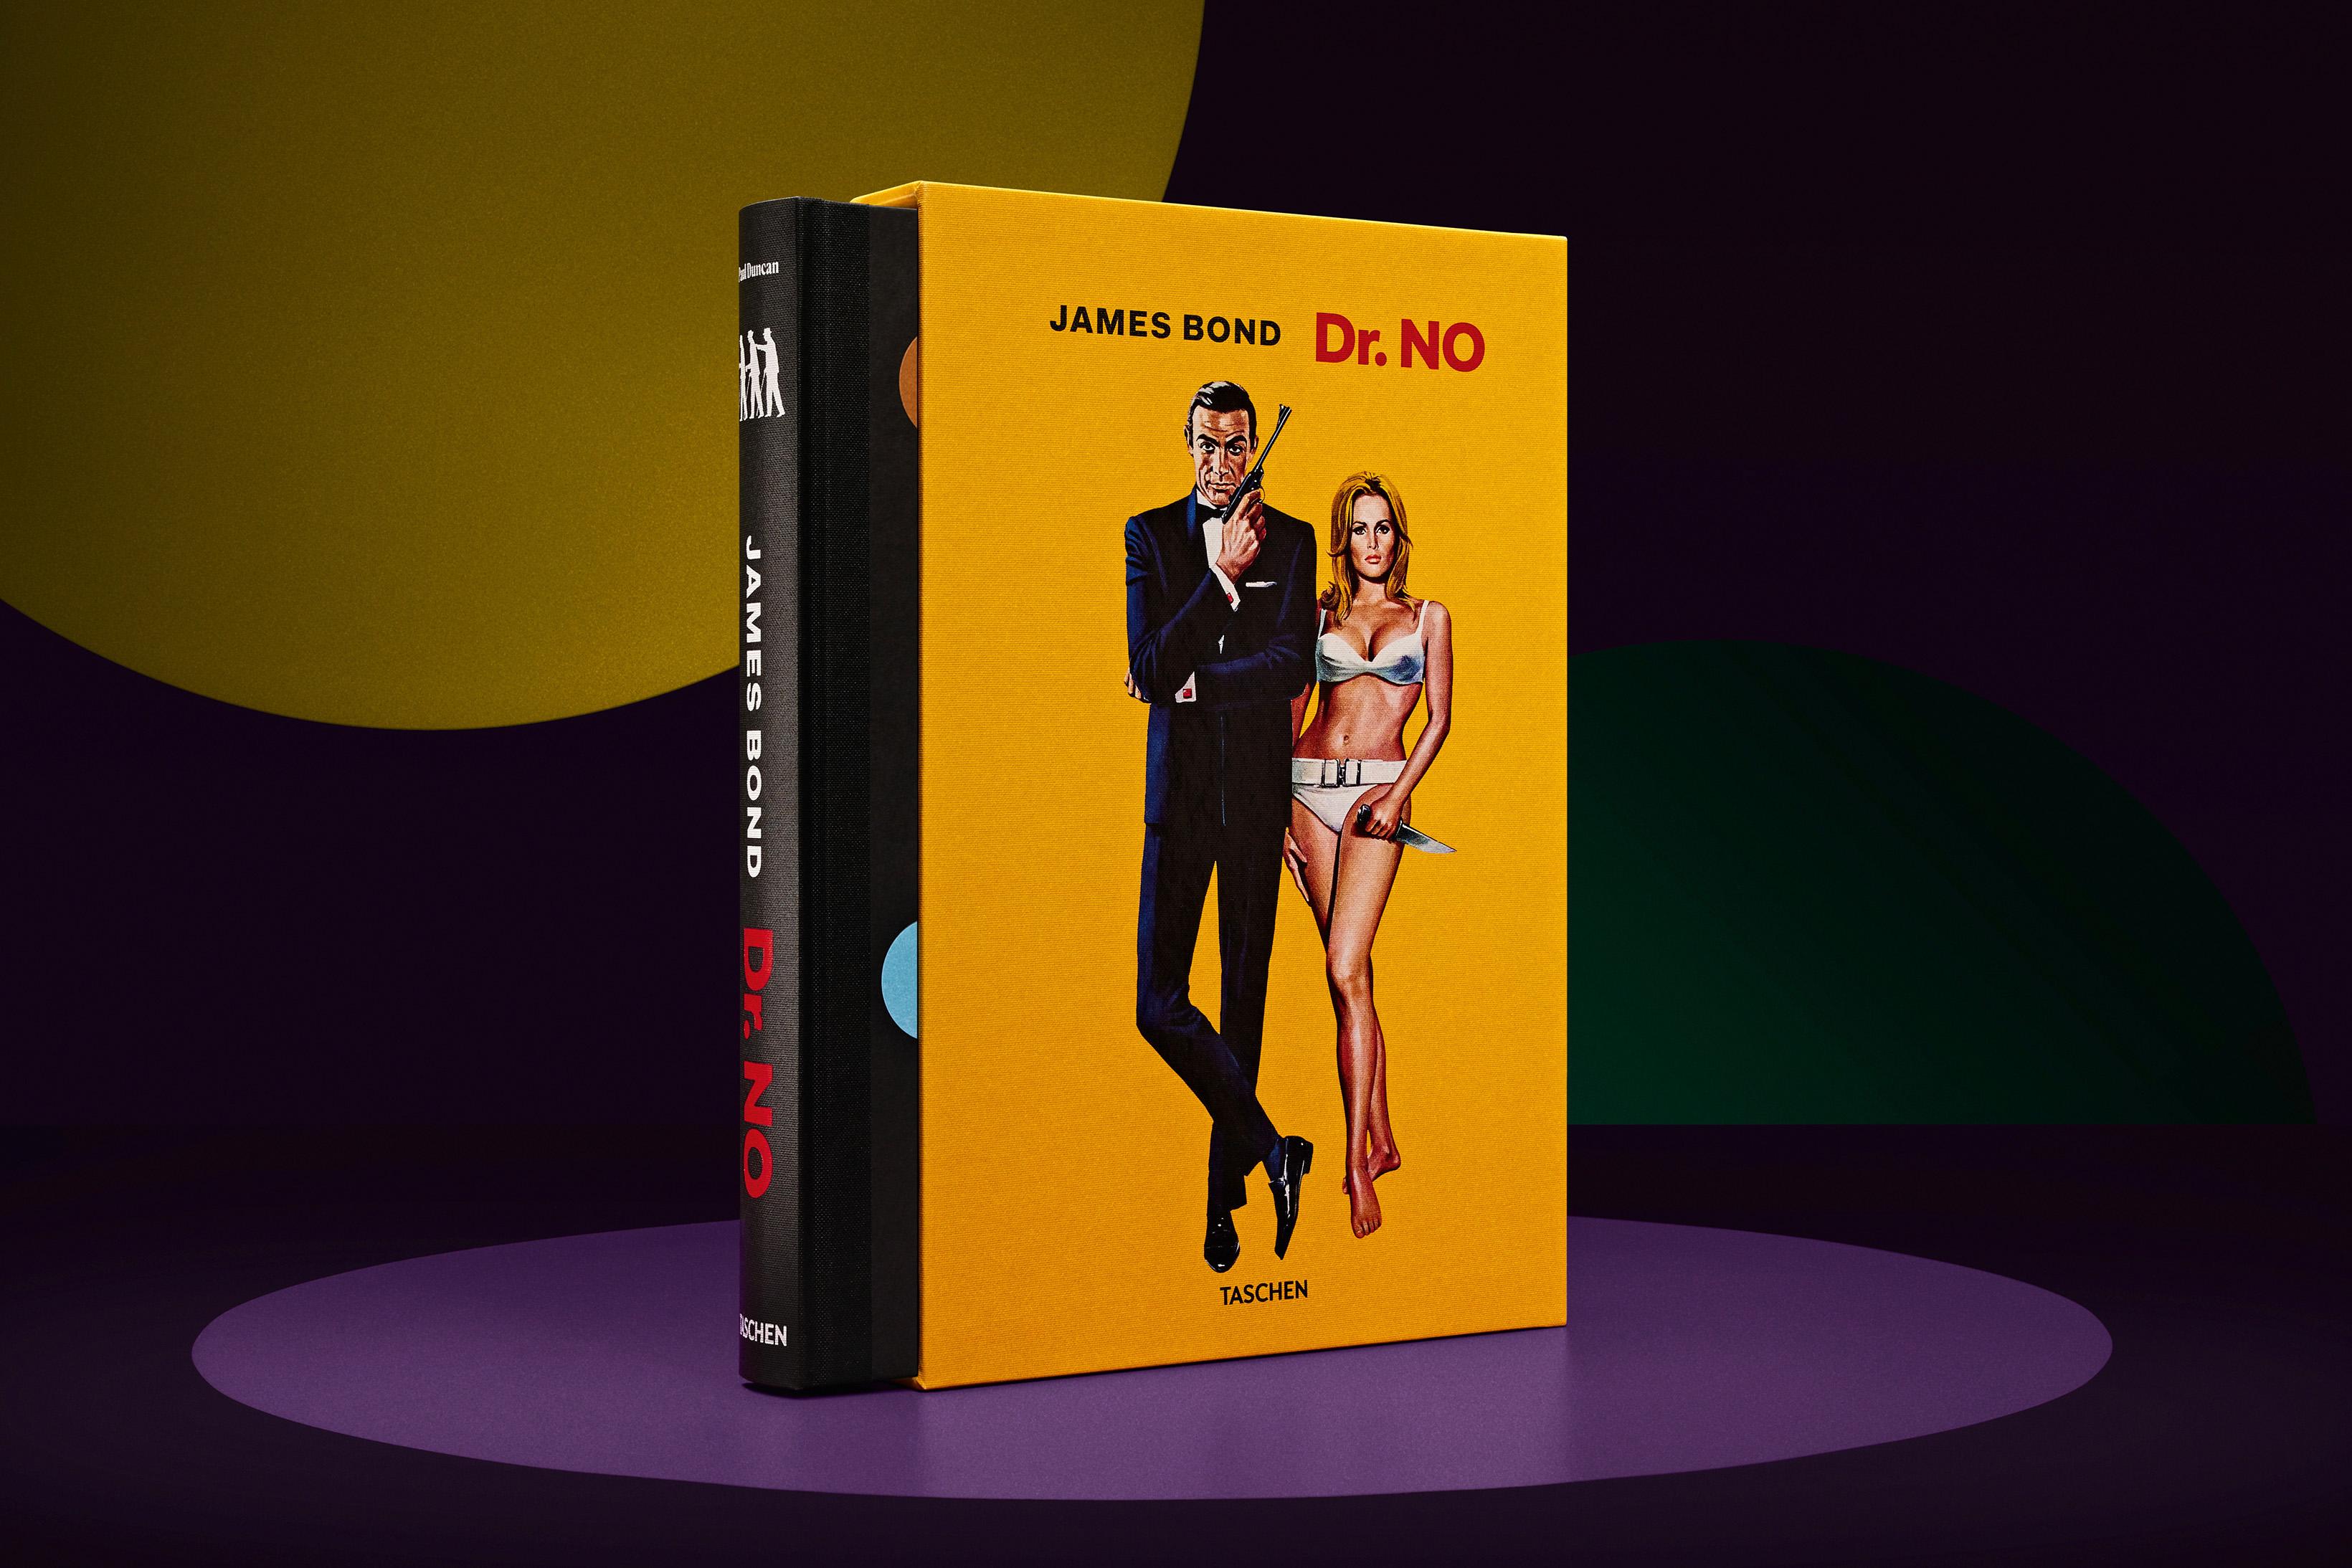 James Bond. Dr. No. ‘Bond, James Bond’, 1962. Limited Ed ChromaLuxe Print & Book For Sale 3